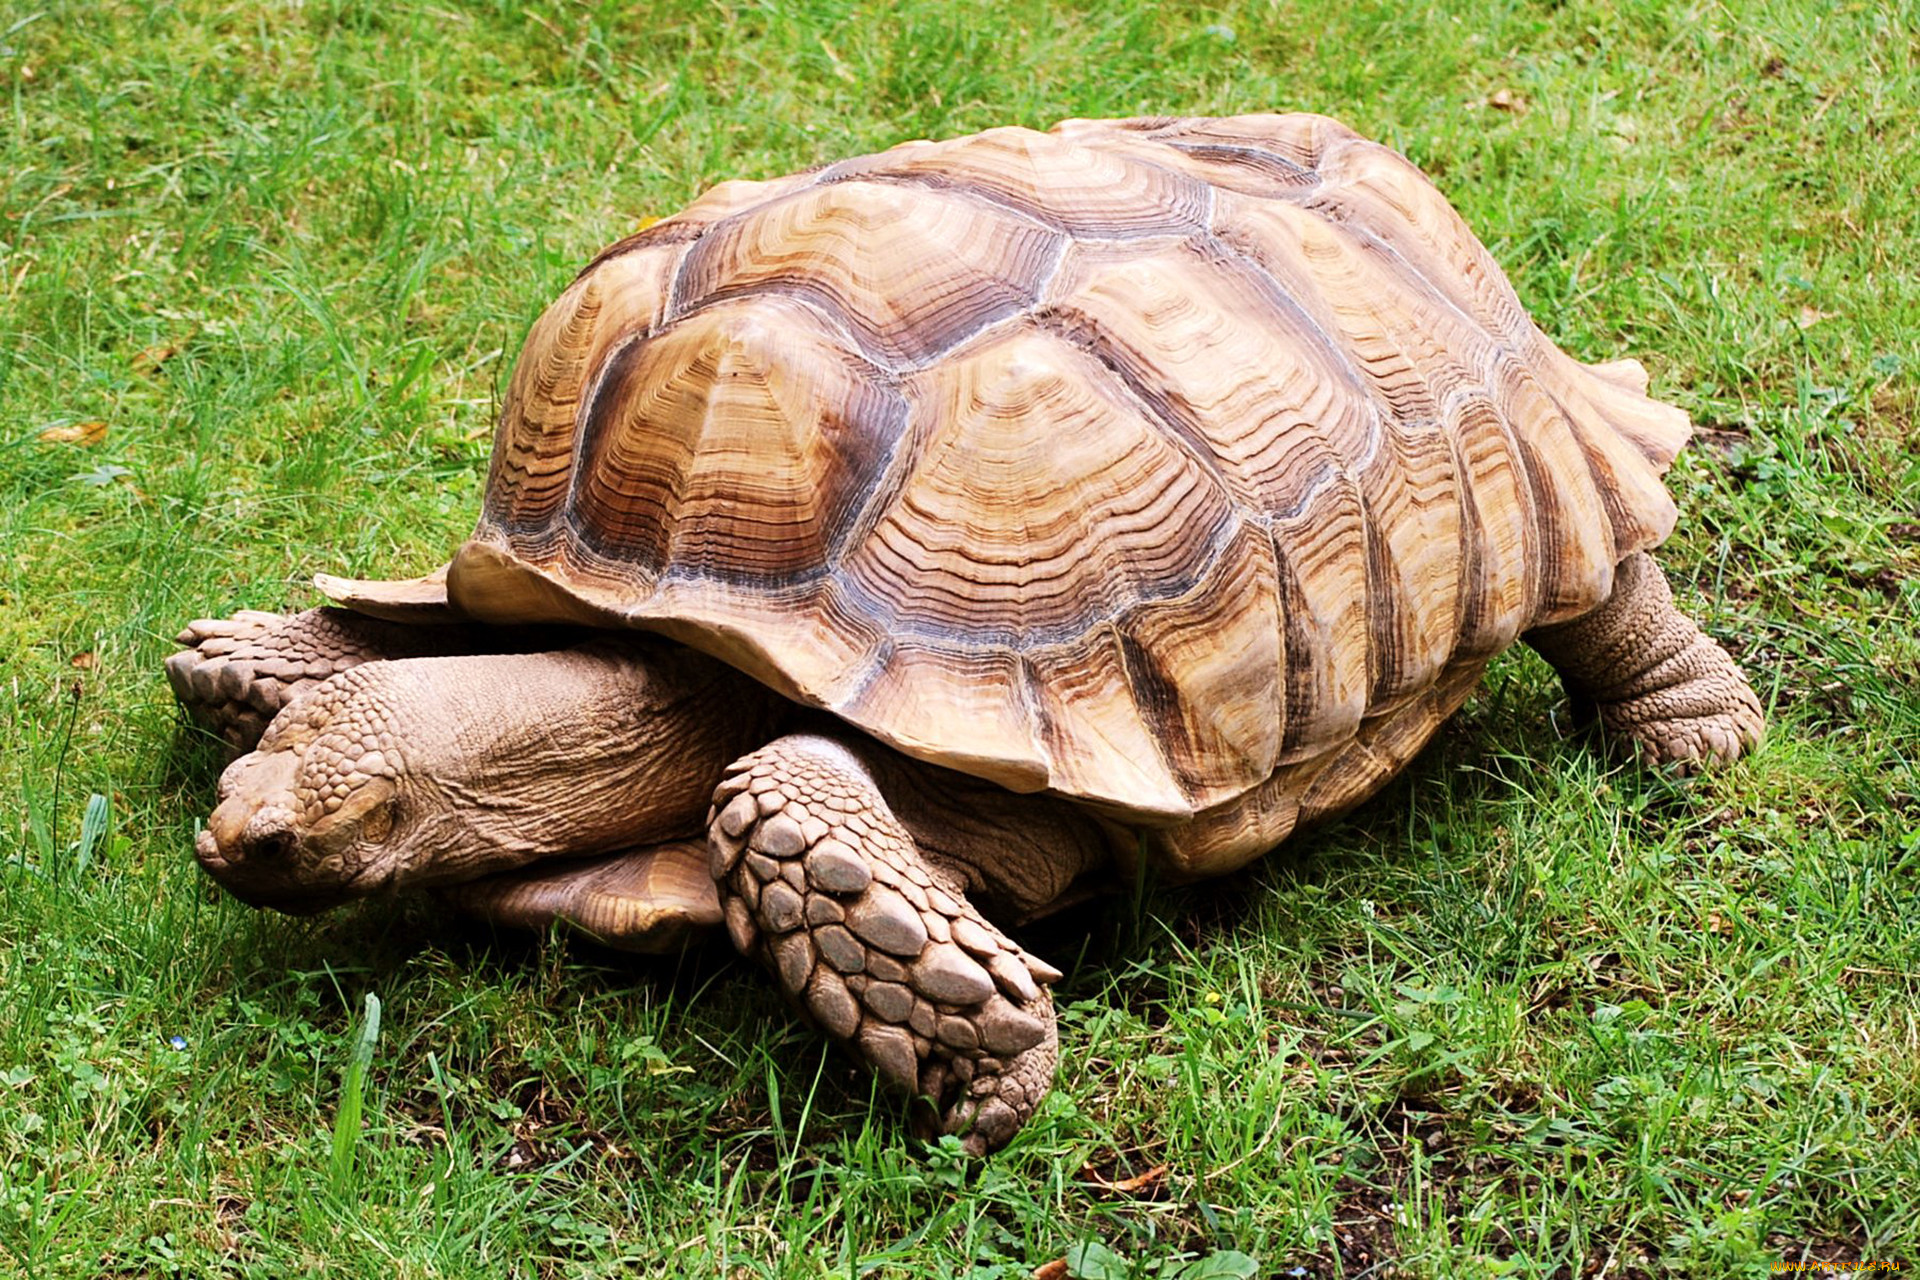 Turtle x. Geochelone sulcata. Африканская шпороносная черепаха. Сухопутная черепаха шпороносная. Сульката черепаха.